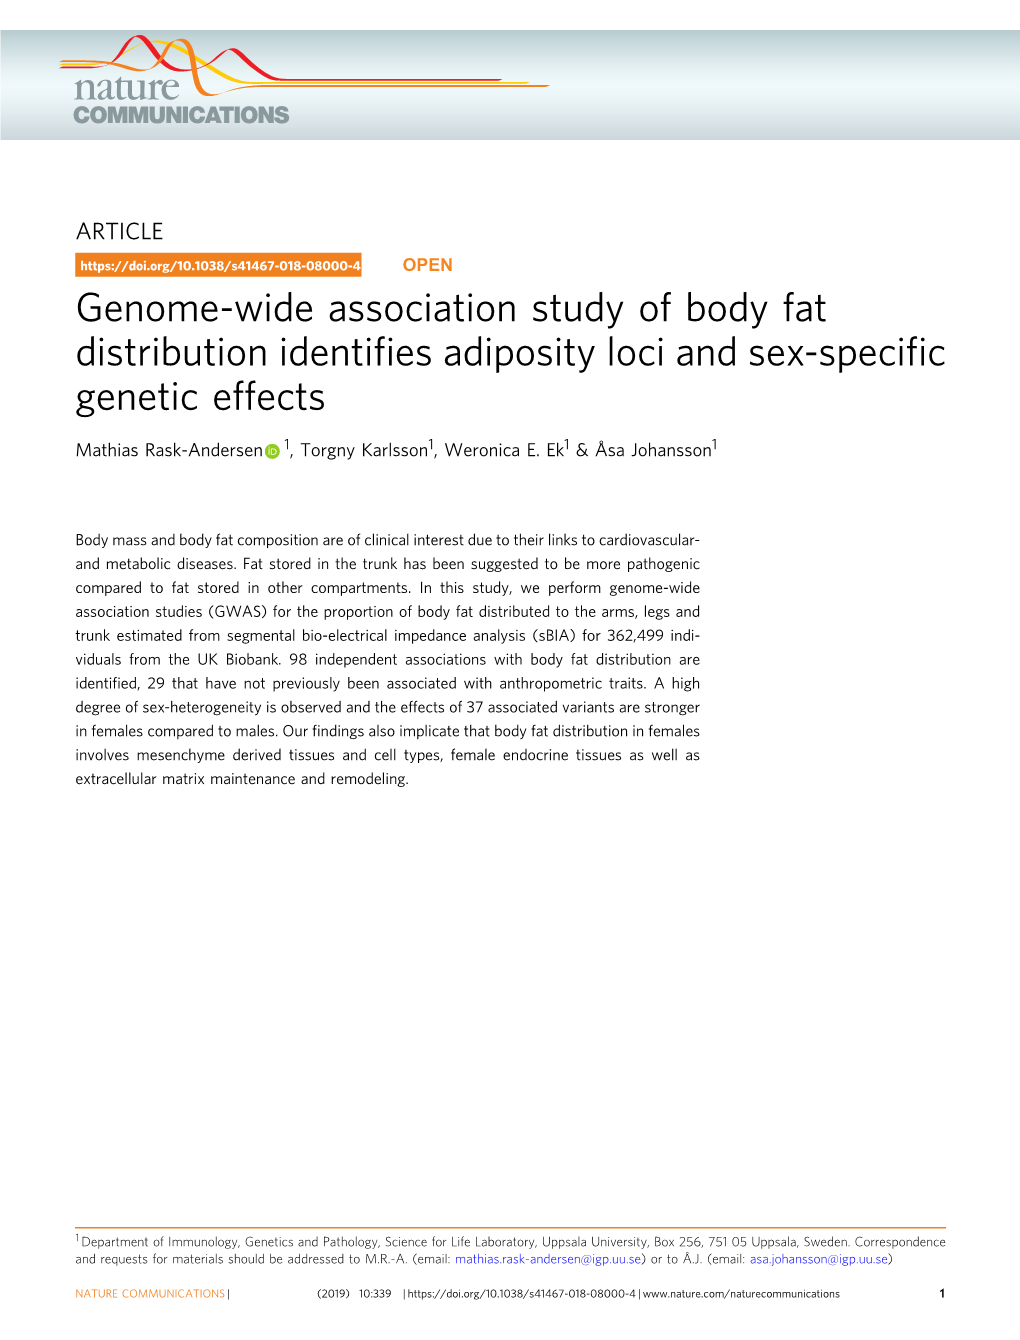 Genome-Wide Association Study of Body Fat Distribution Identifies